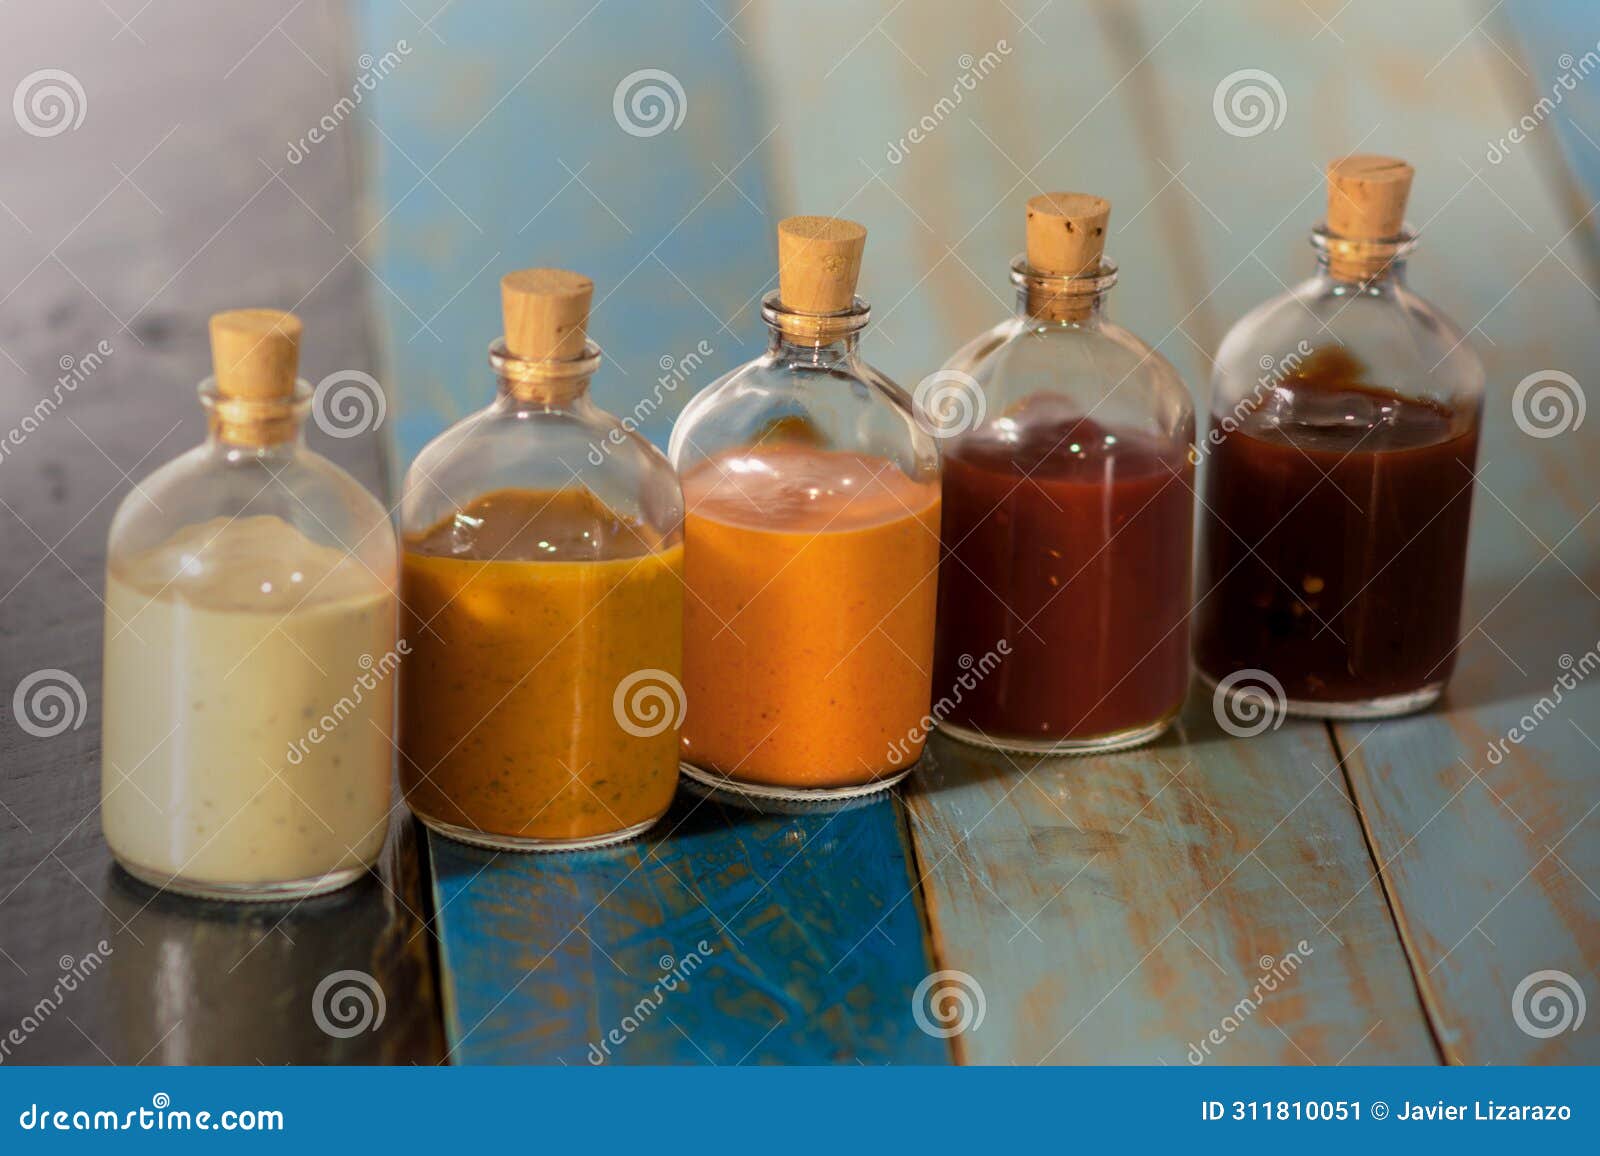 handmade spicy sauces in glass bottles with cork on a colored wooden base, salsas picantes hechas artesanalmente en botellas de